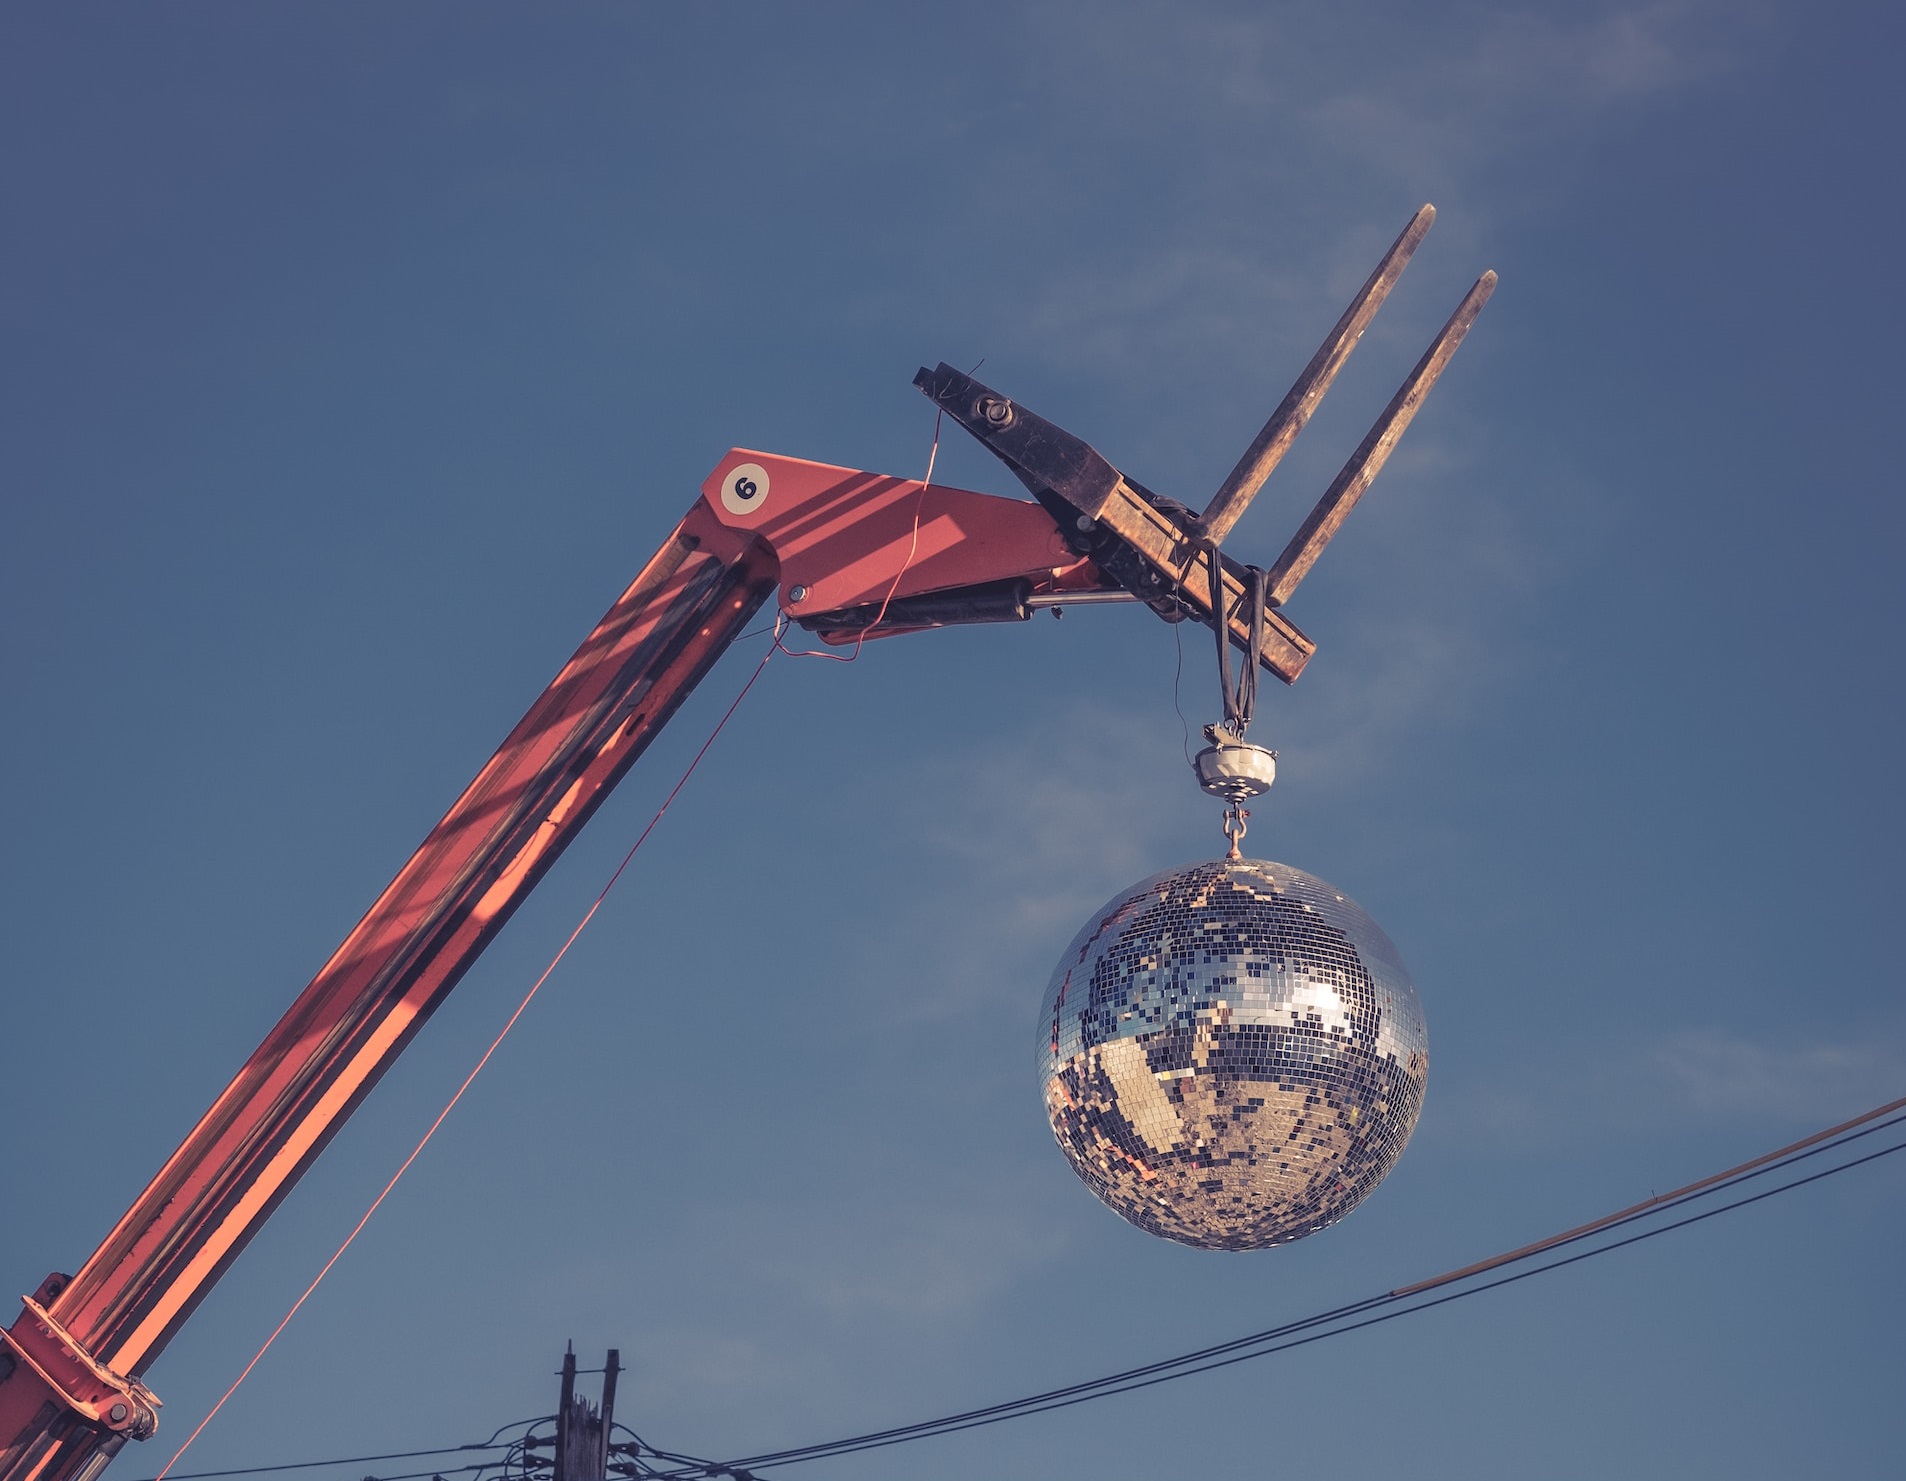 wrecking-ball-crane-photo-by-lance-anderson-unsplash